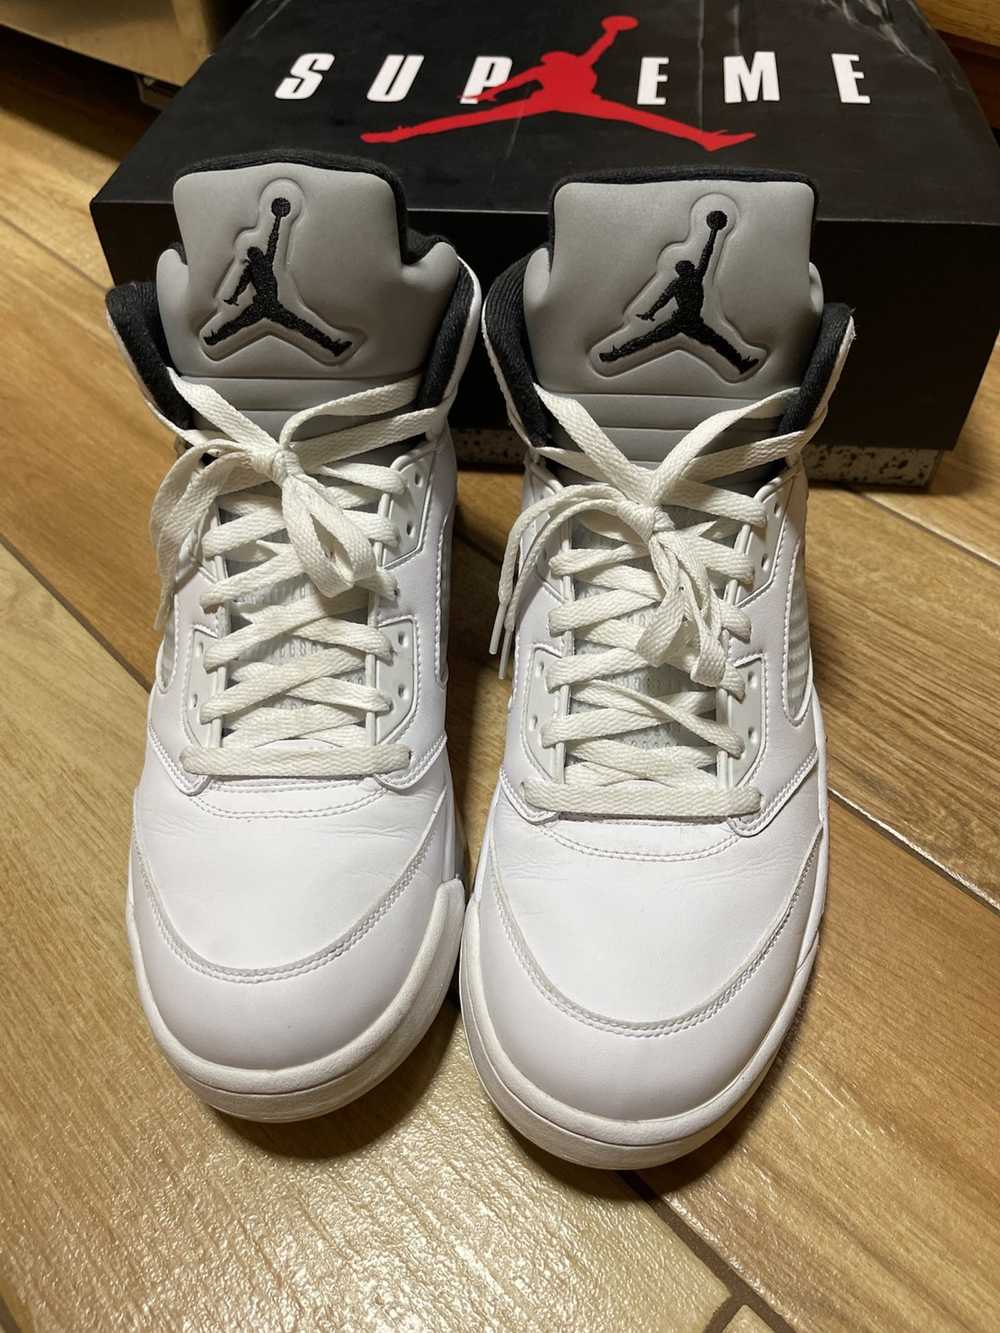 Jordan Brand × Supreme Jordan 5 x Supreme “White” - image 4